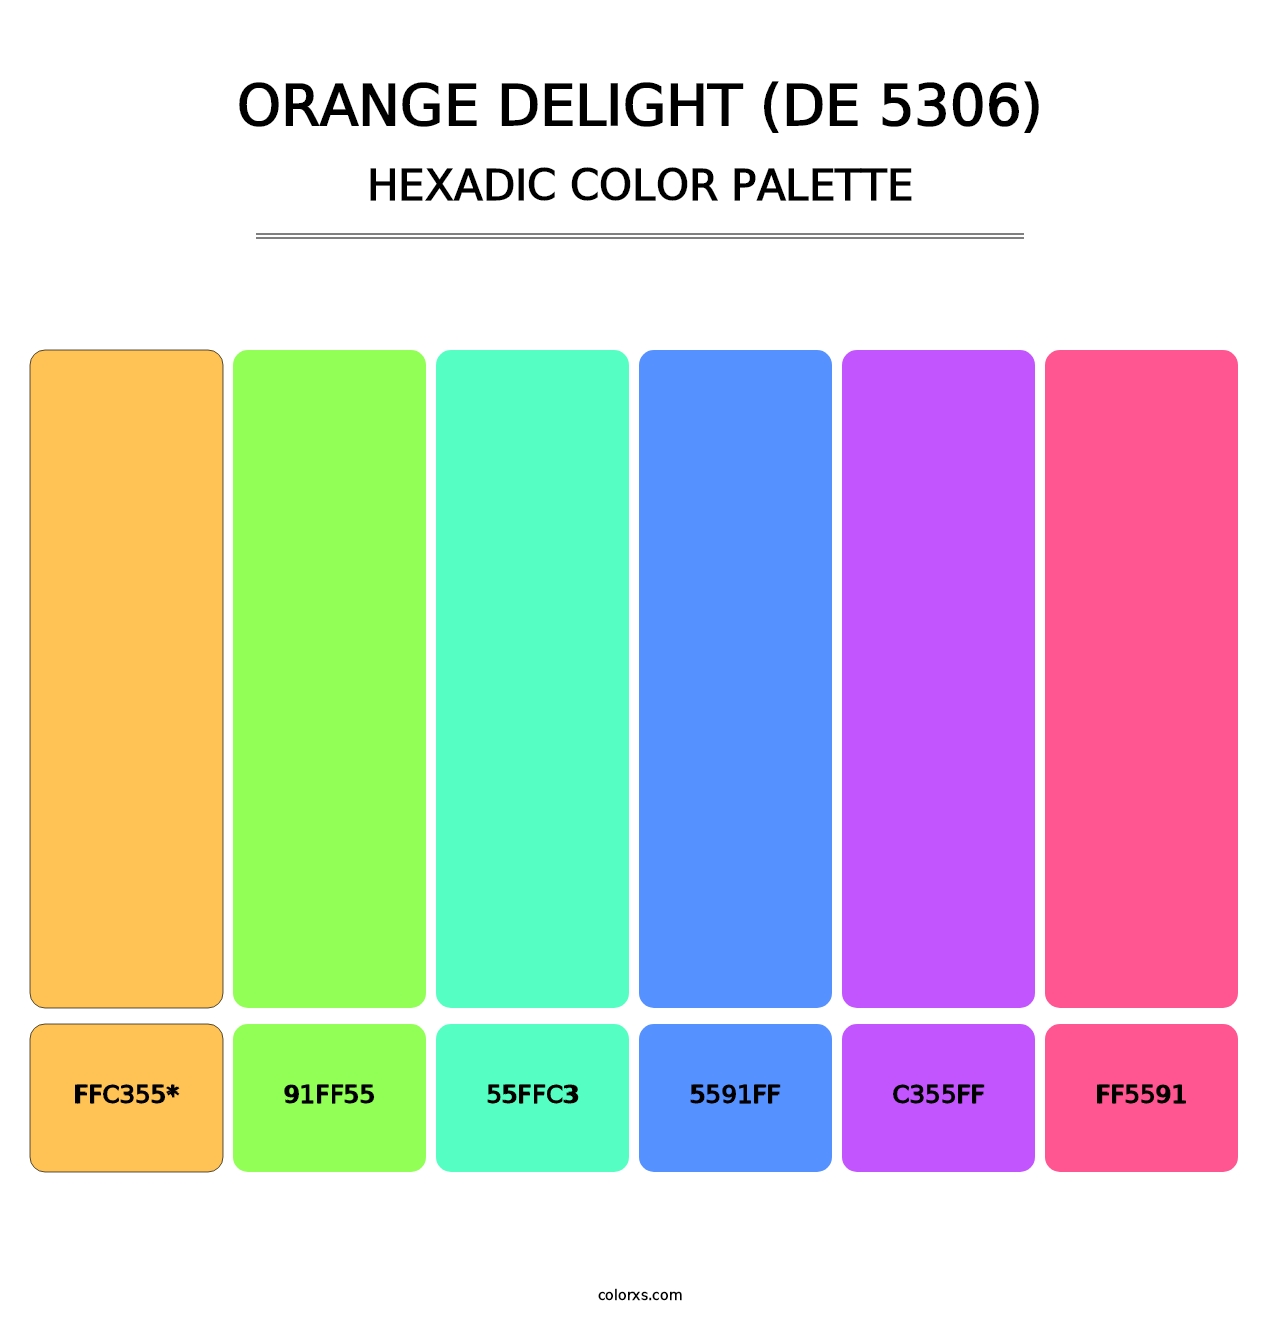 Orange Delight (DE 5306) - Hexadic Color Palette